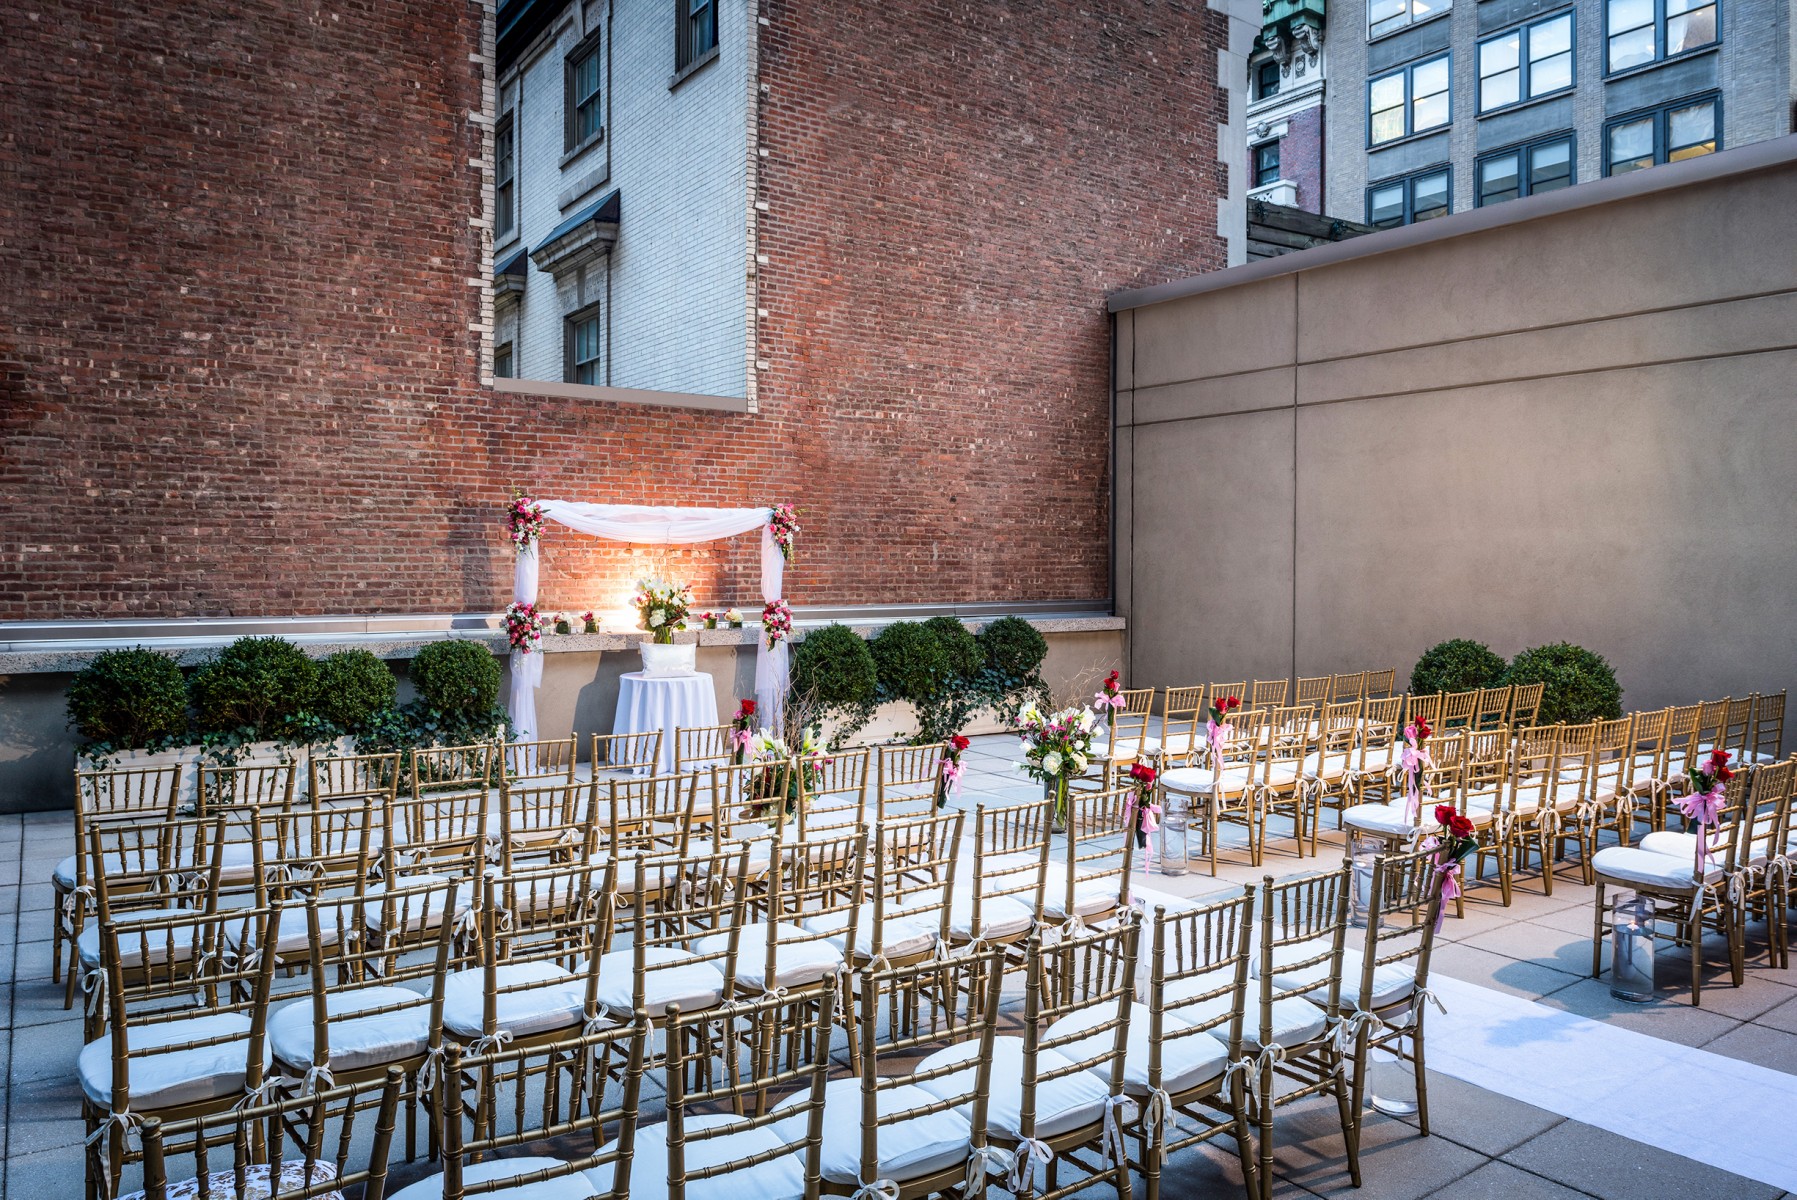 Photo of the hotel Sofitel New York: Wedding reception concorde terrace web